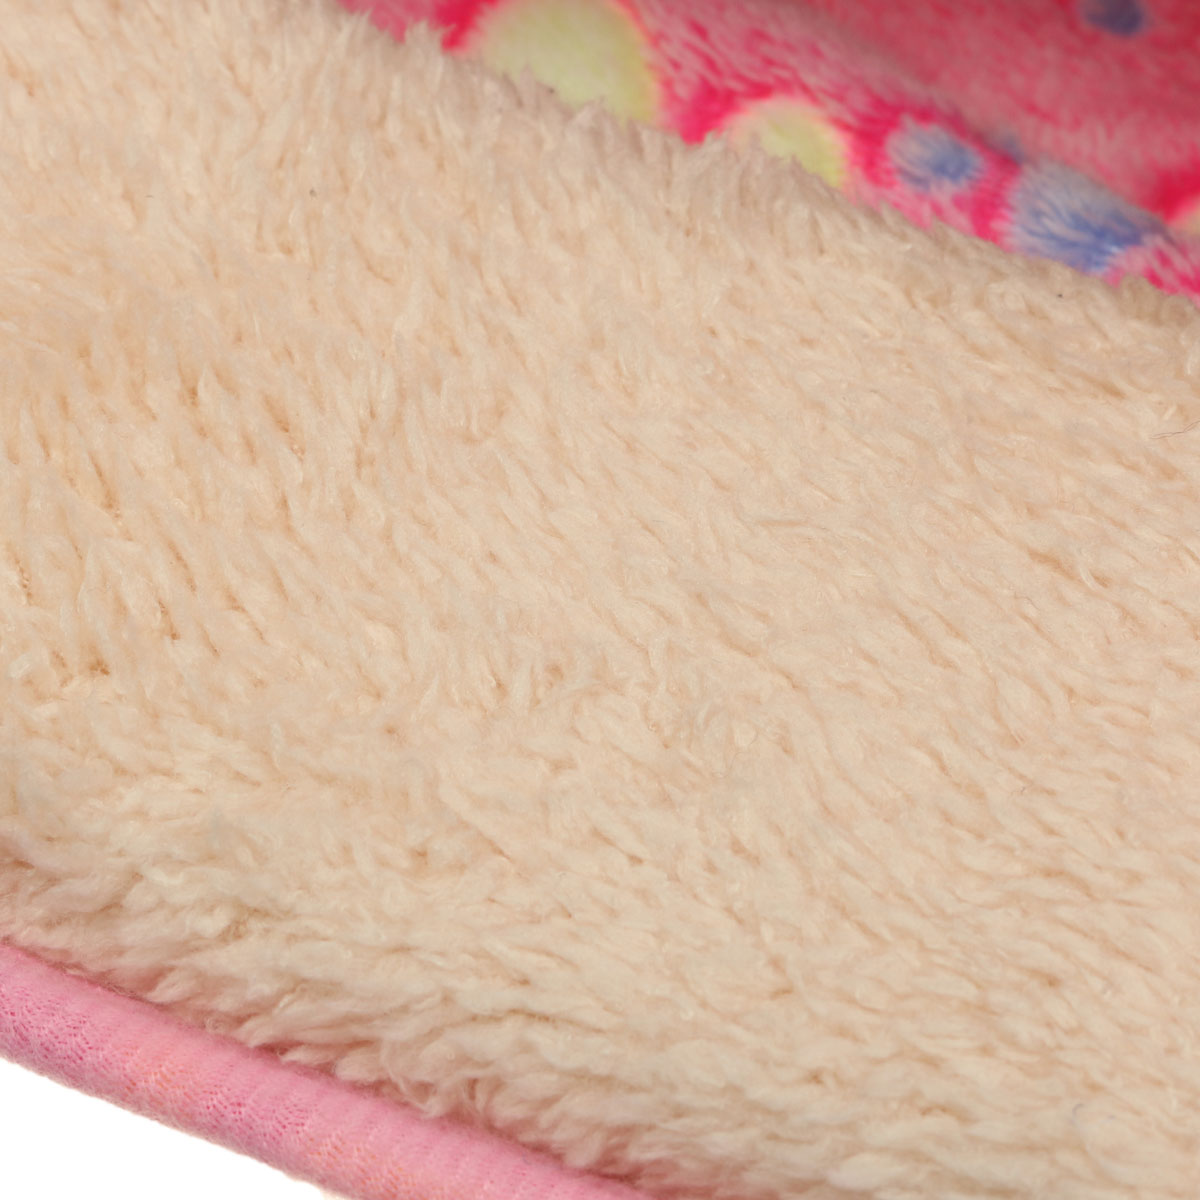 Pet Dog Cat Bed Puppy Cotton Pet Nest Sleeping Warm Cushion Pad House Hut Basket Kennel Sofa Bed